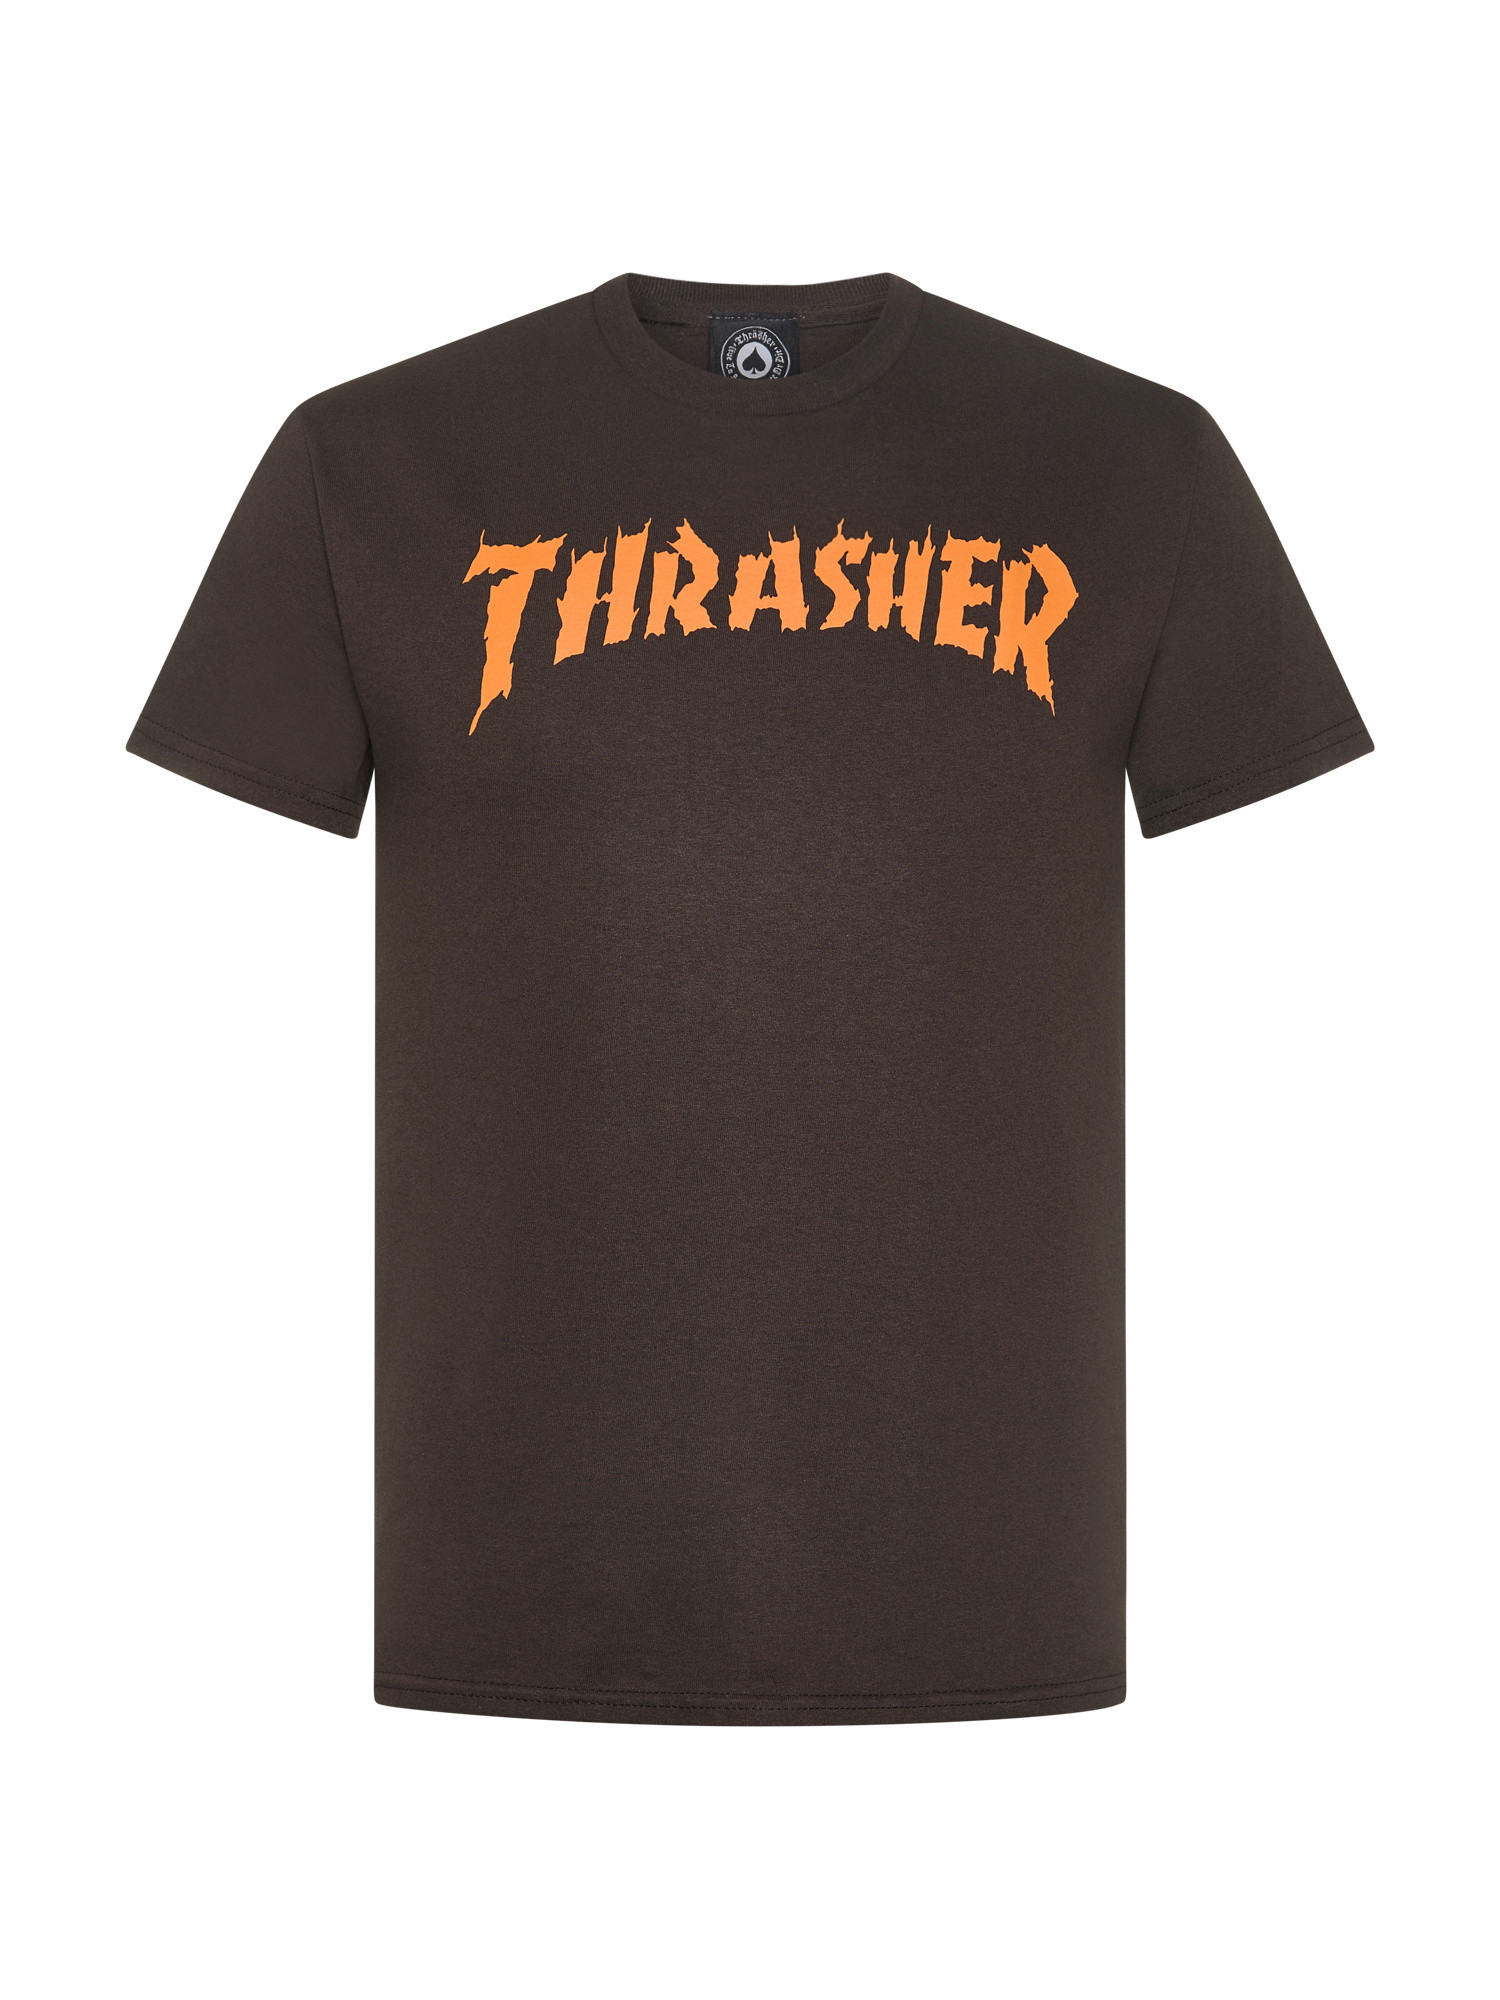 Thrasher - Burn it down print T-Shirt, Brown, large image number 0